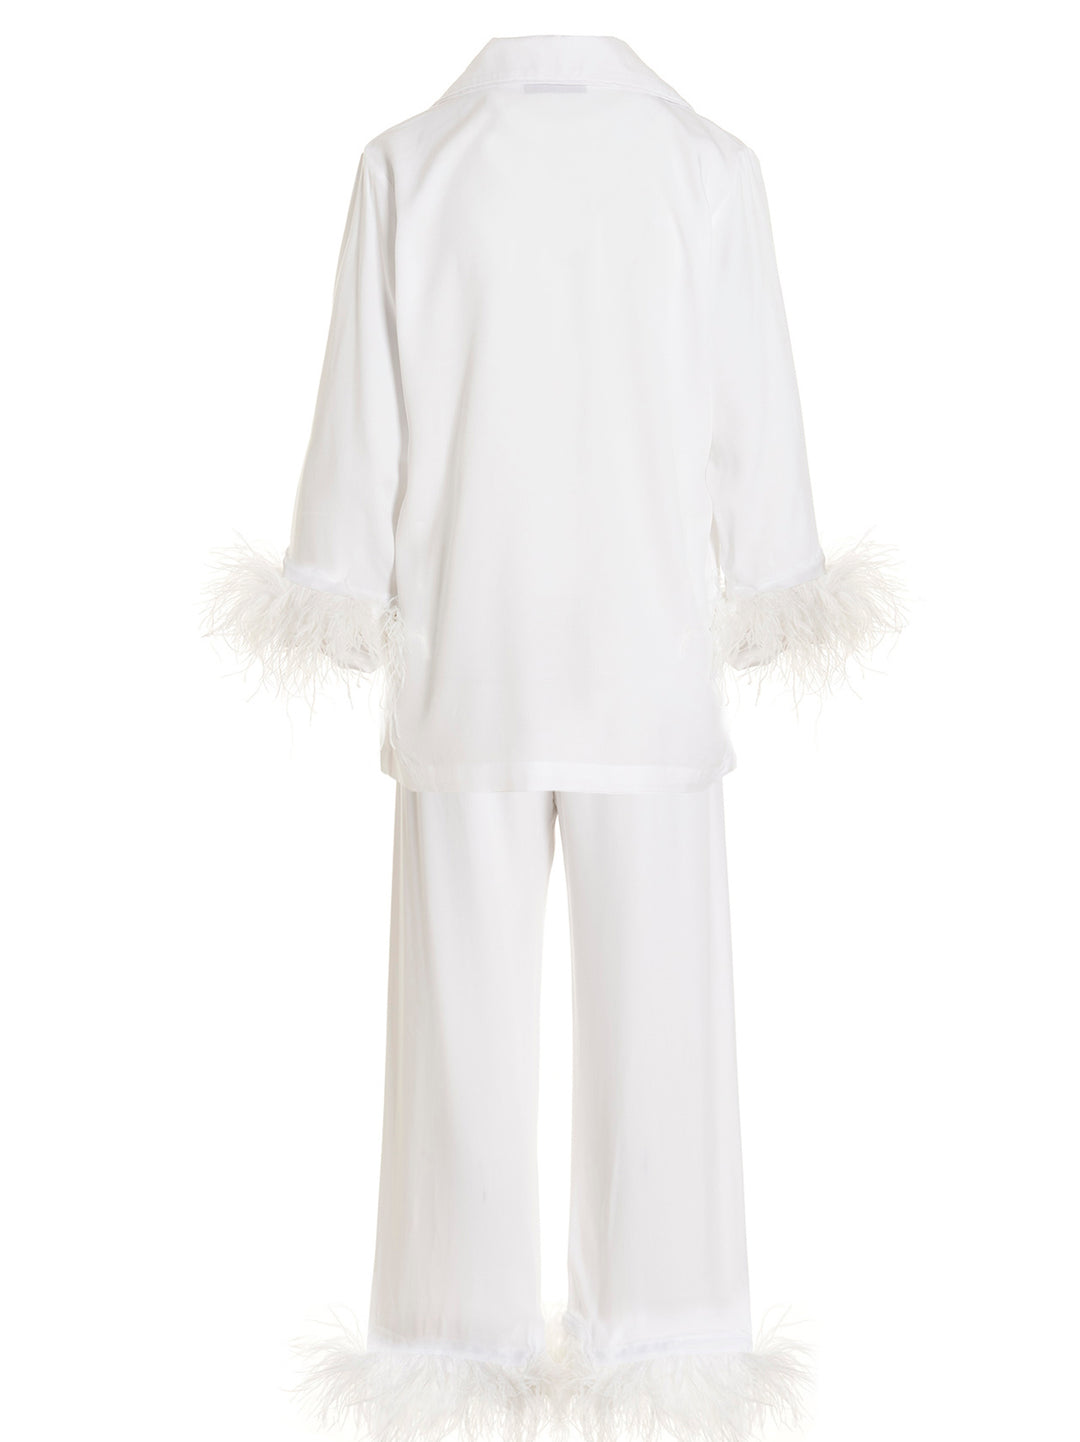 'Party Pajama' Abiti Bianco